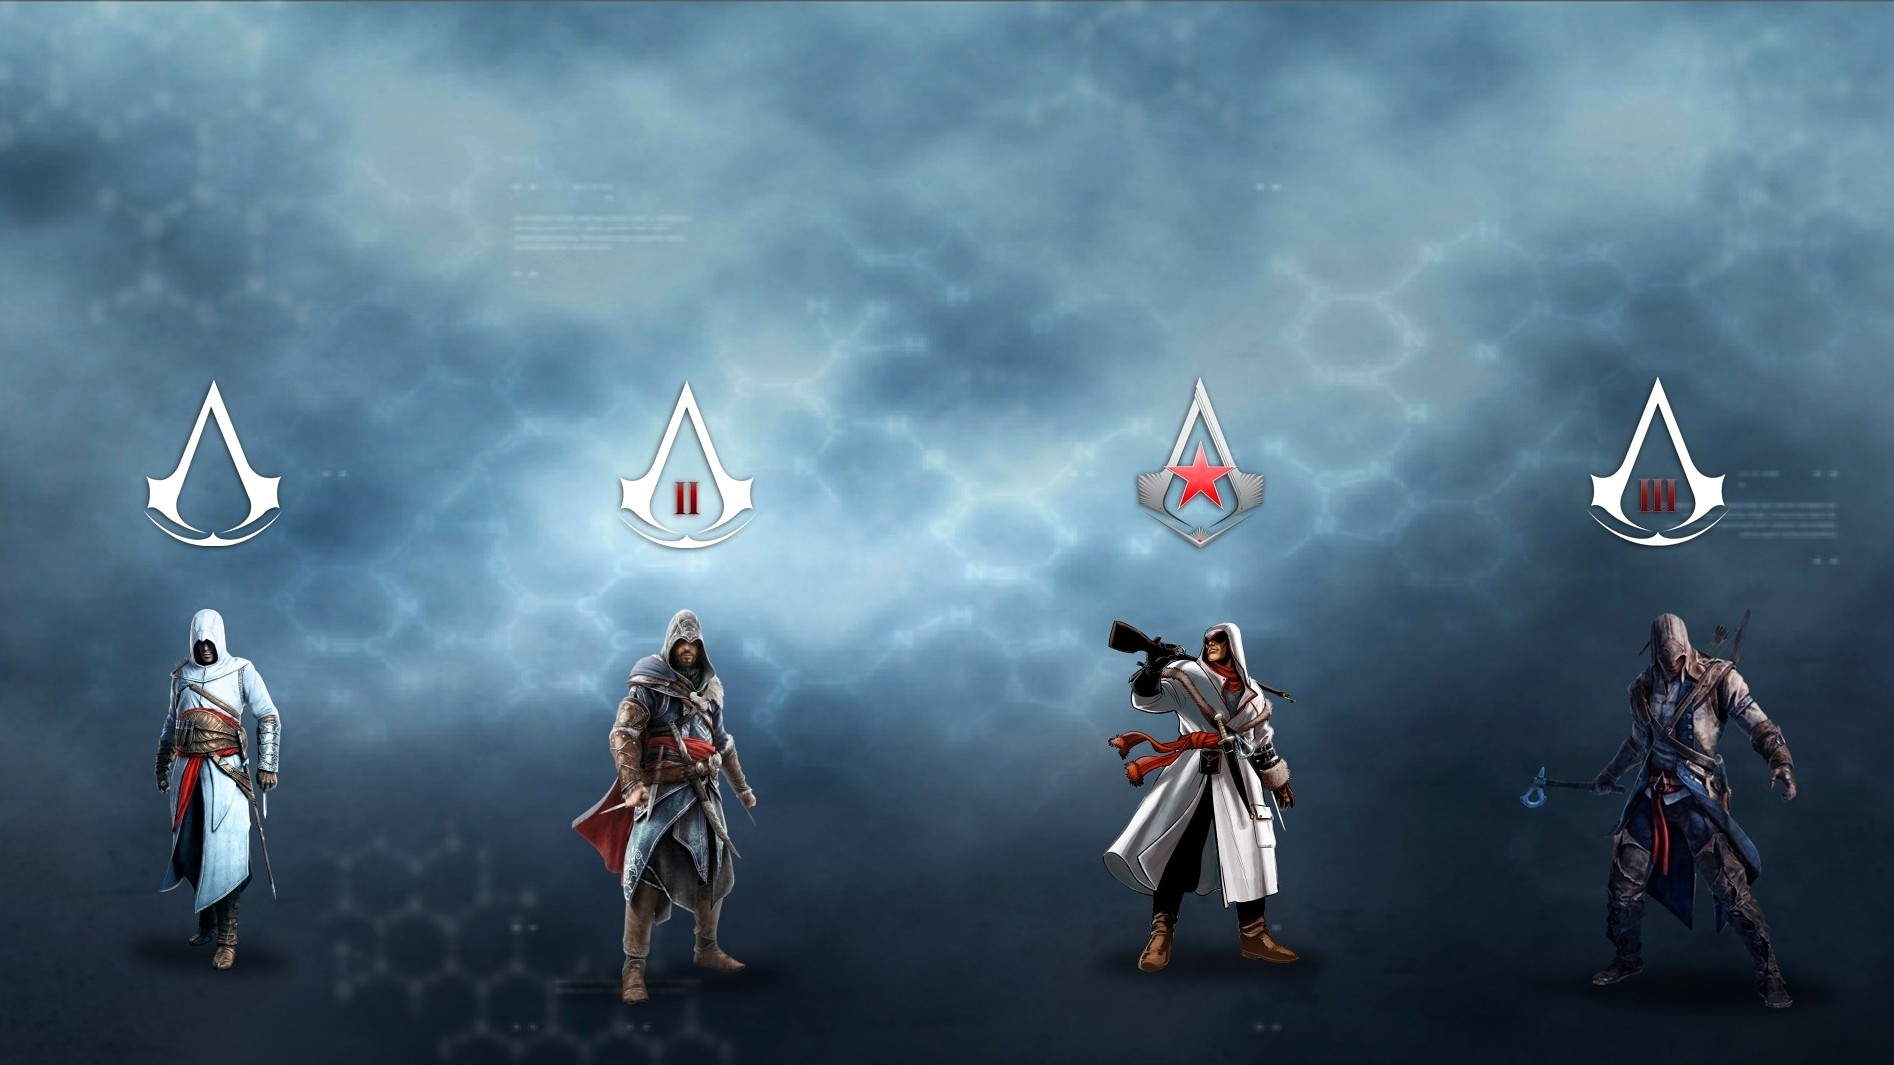 Assassins Creed Wallpaper